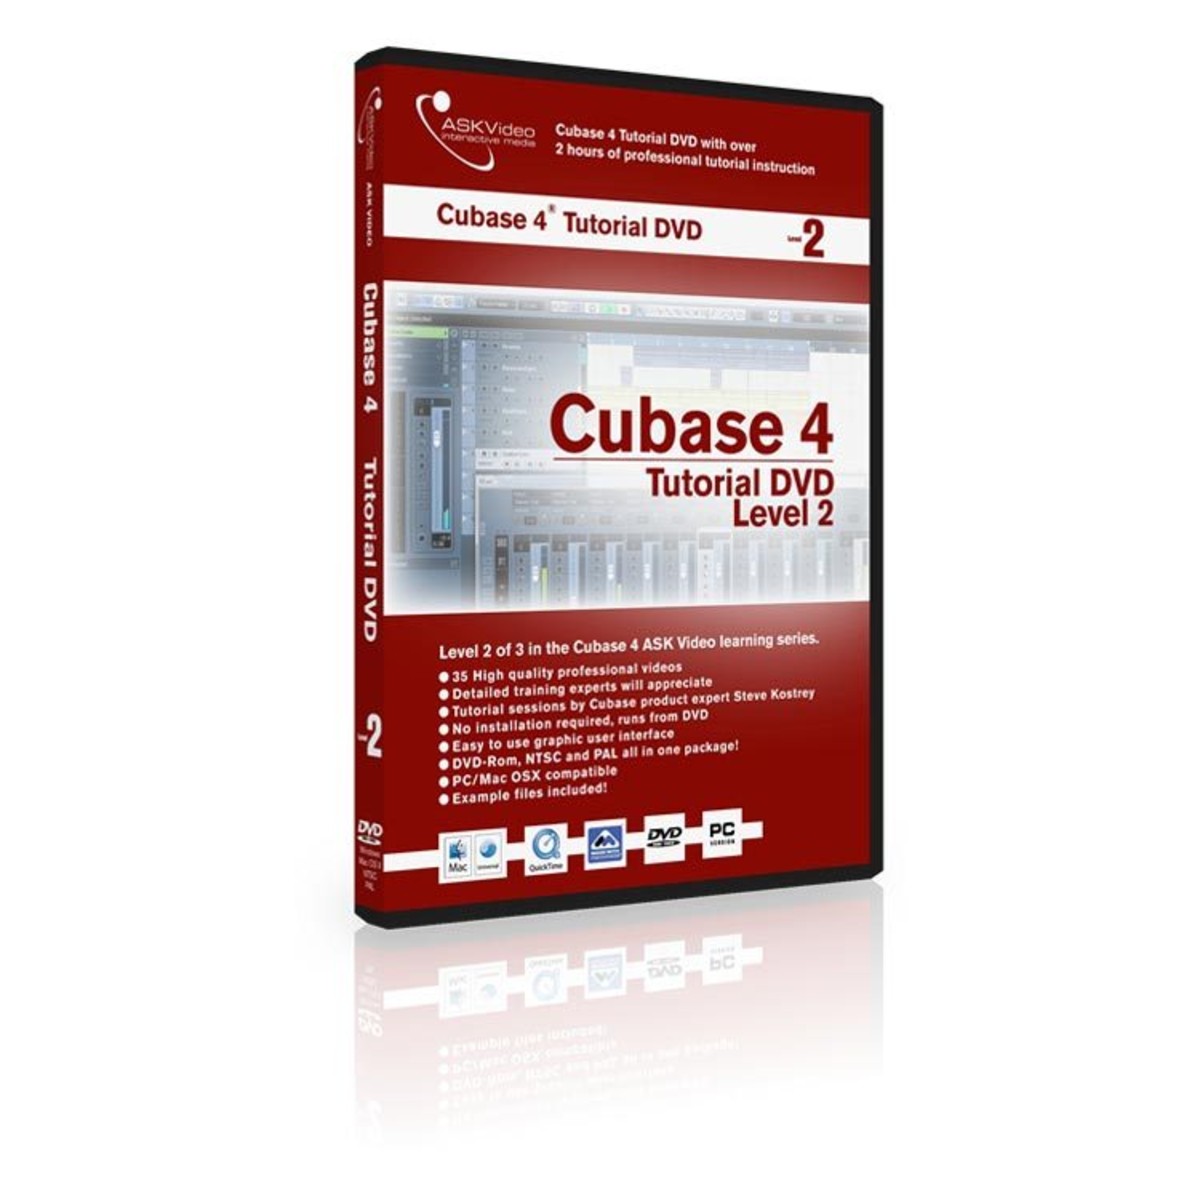 cubase 5 tutorial dvd level 2 free download